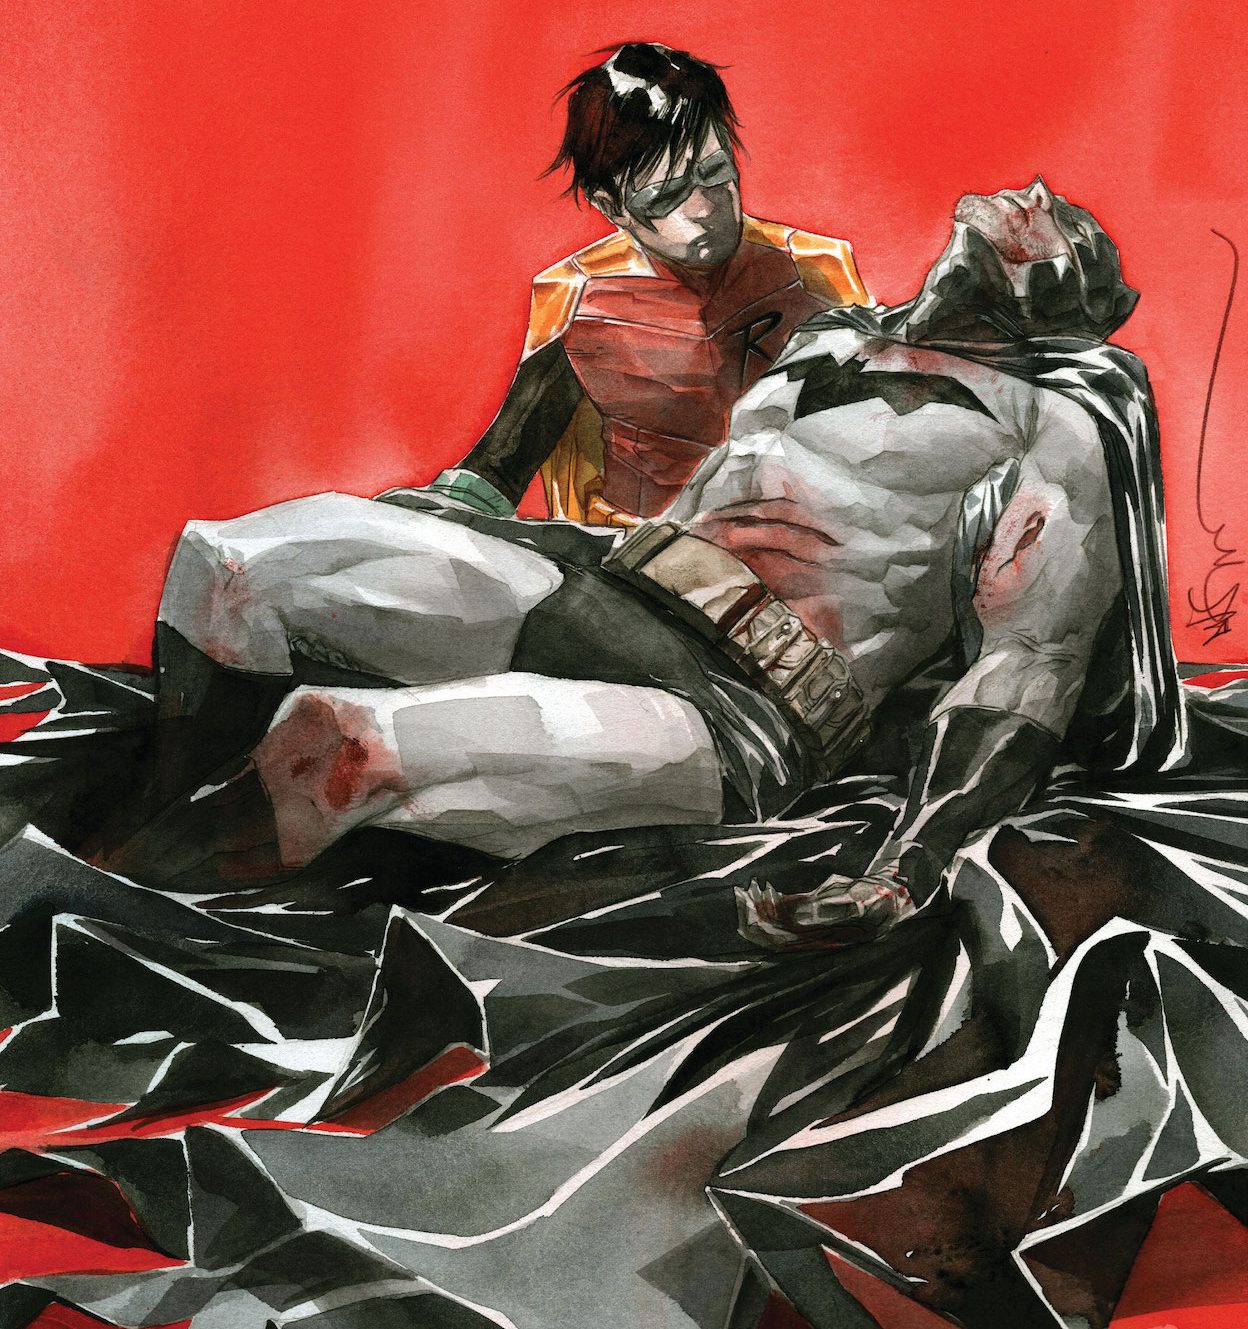 'Robin & Batman' #3 review: Robin's reckoning